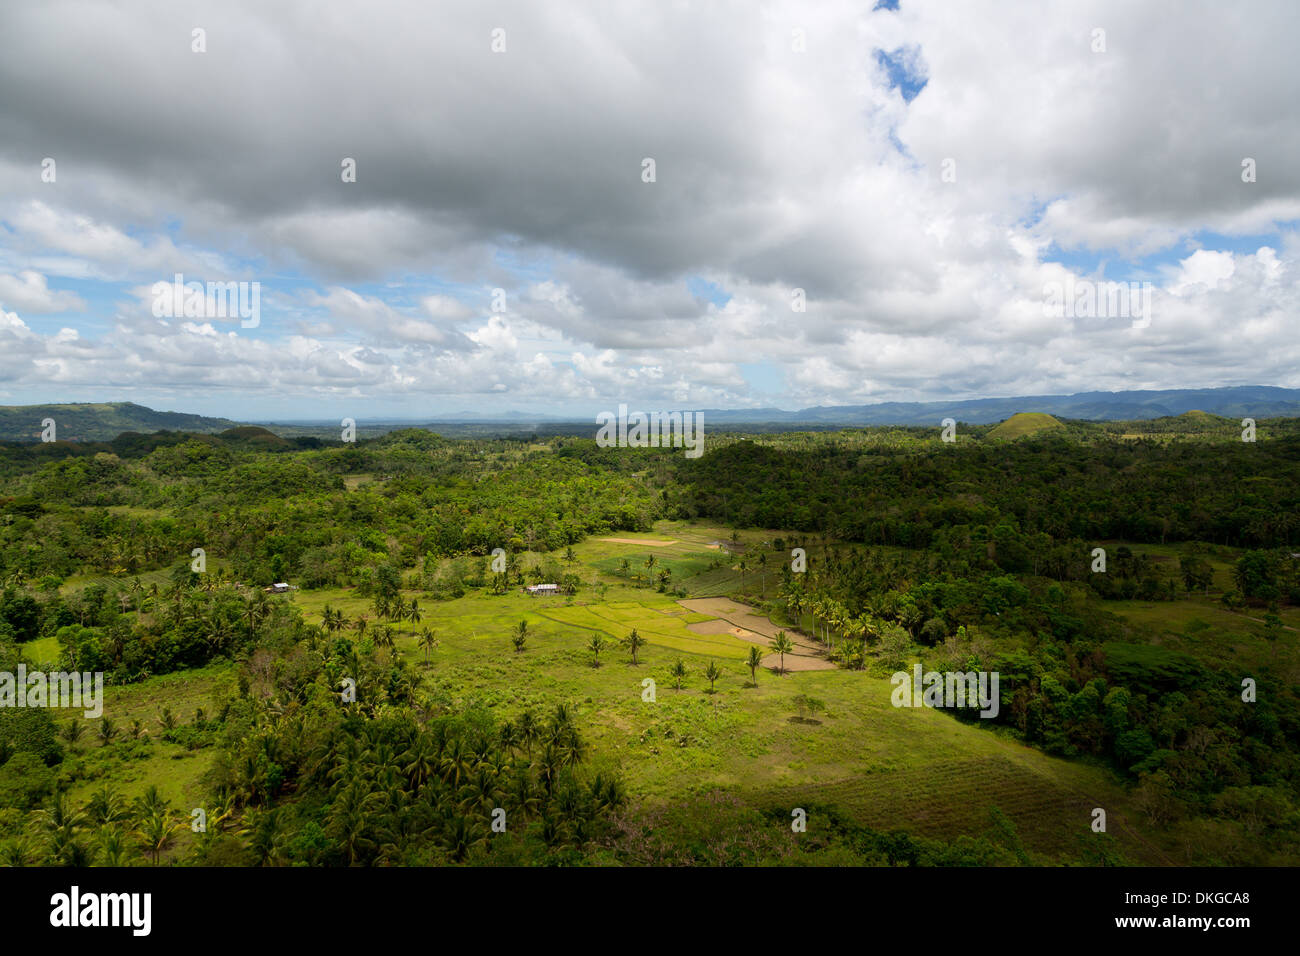 Typical landscape on Bohol, Philippines Stock Photo